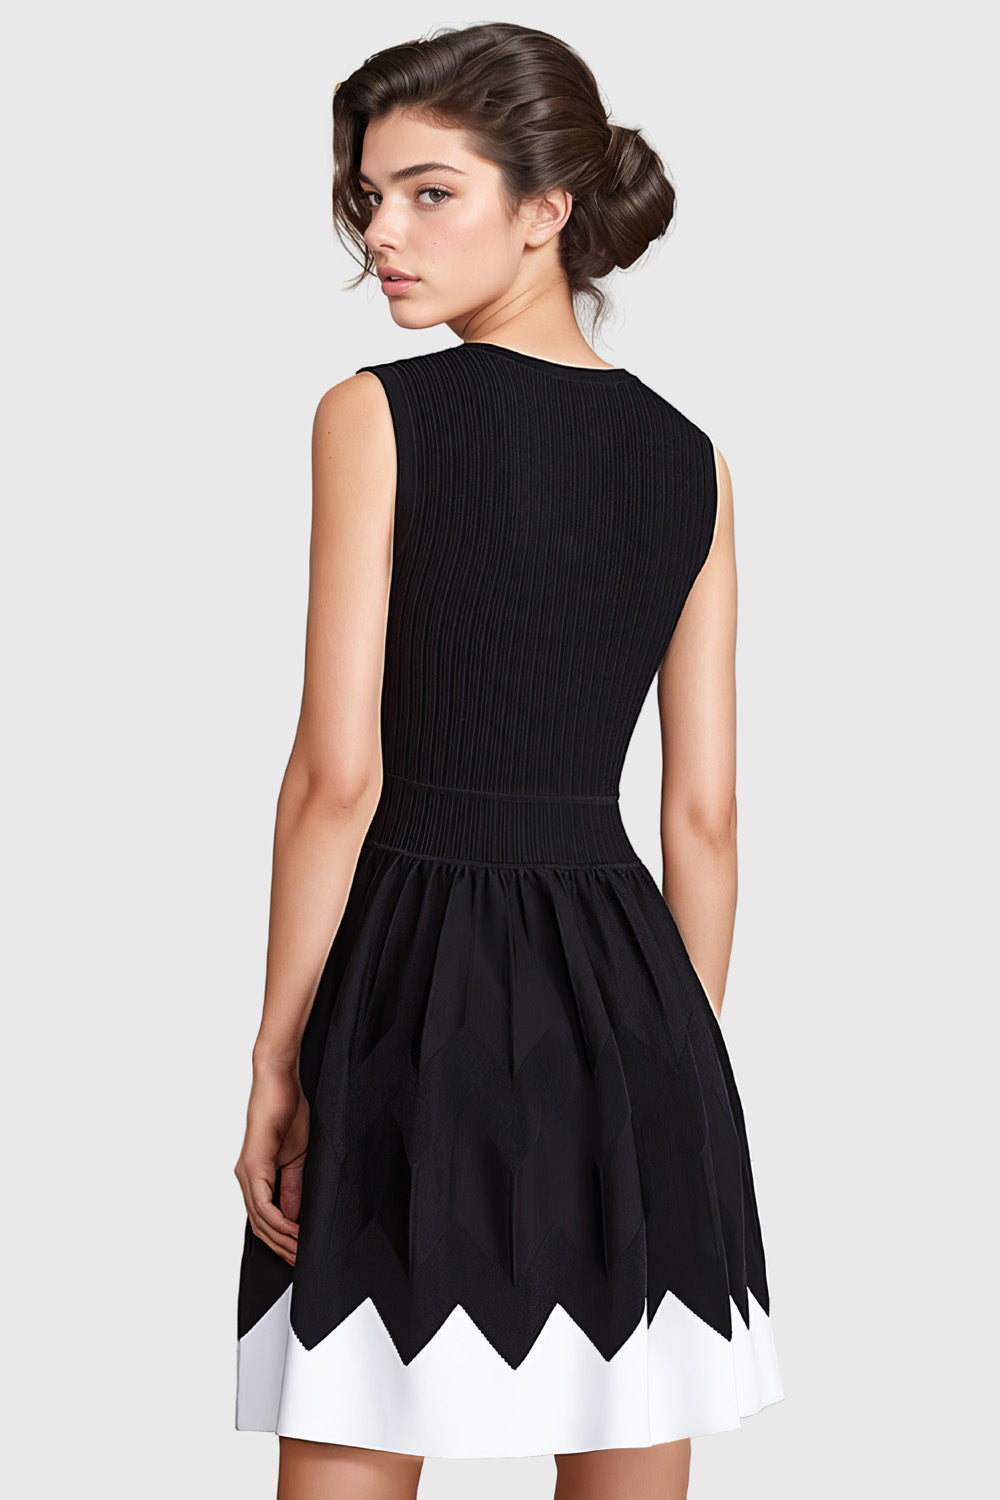 Contrast Dress - Black